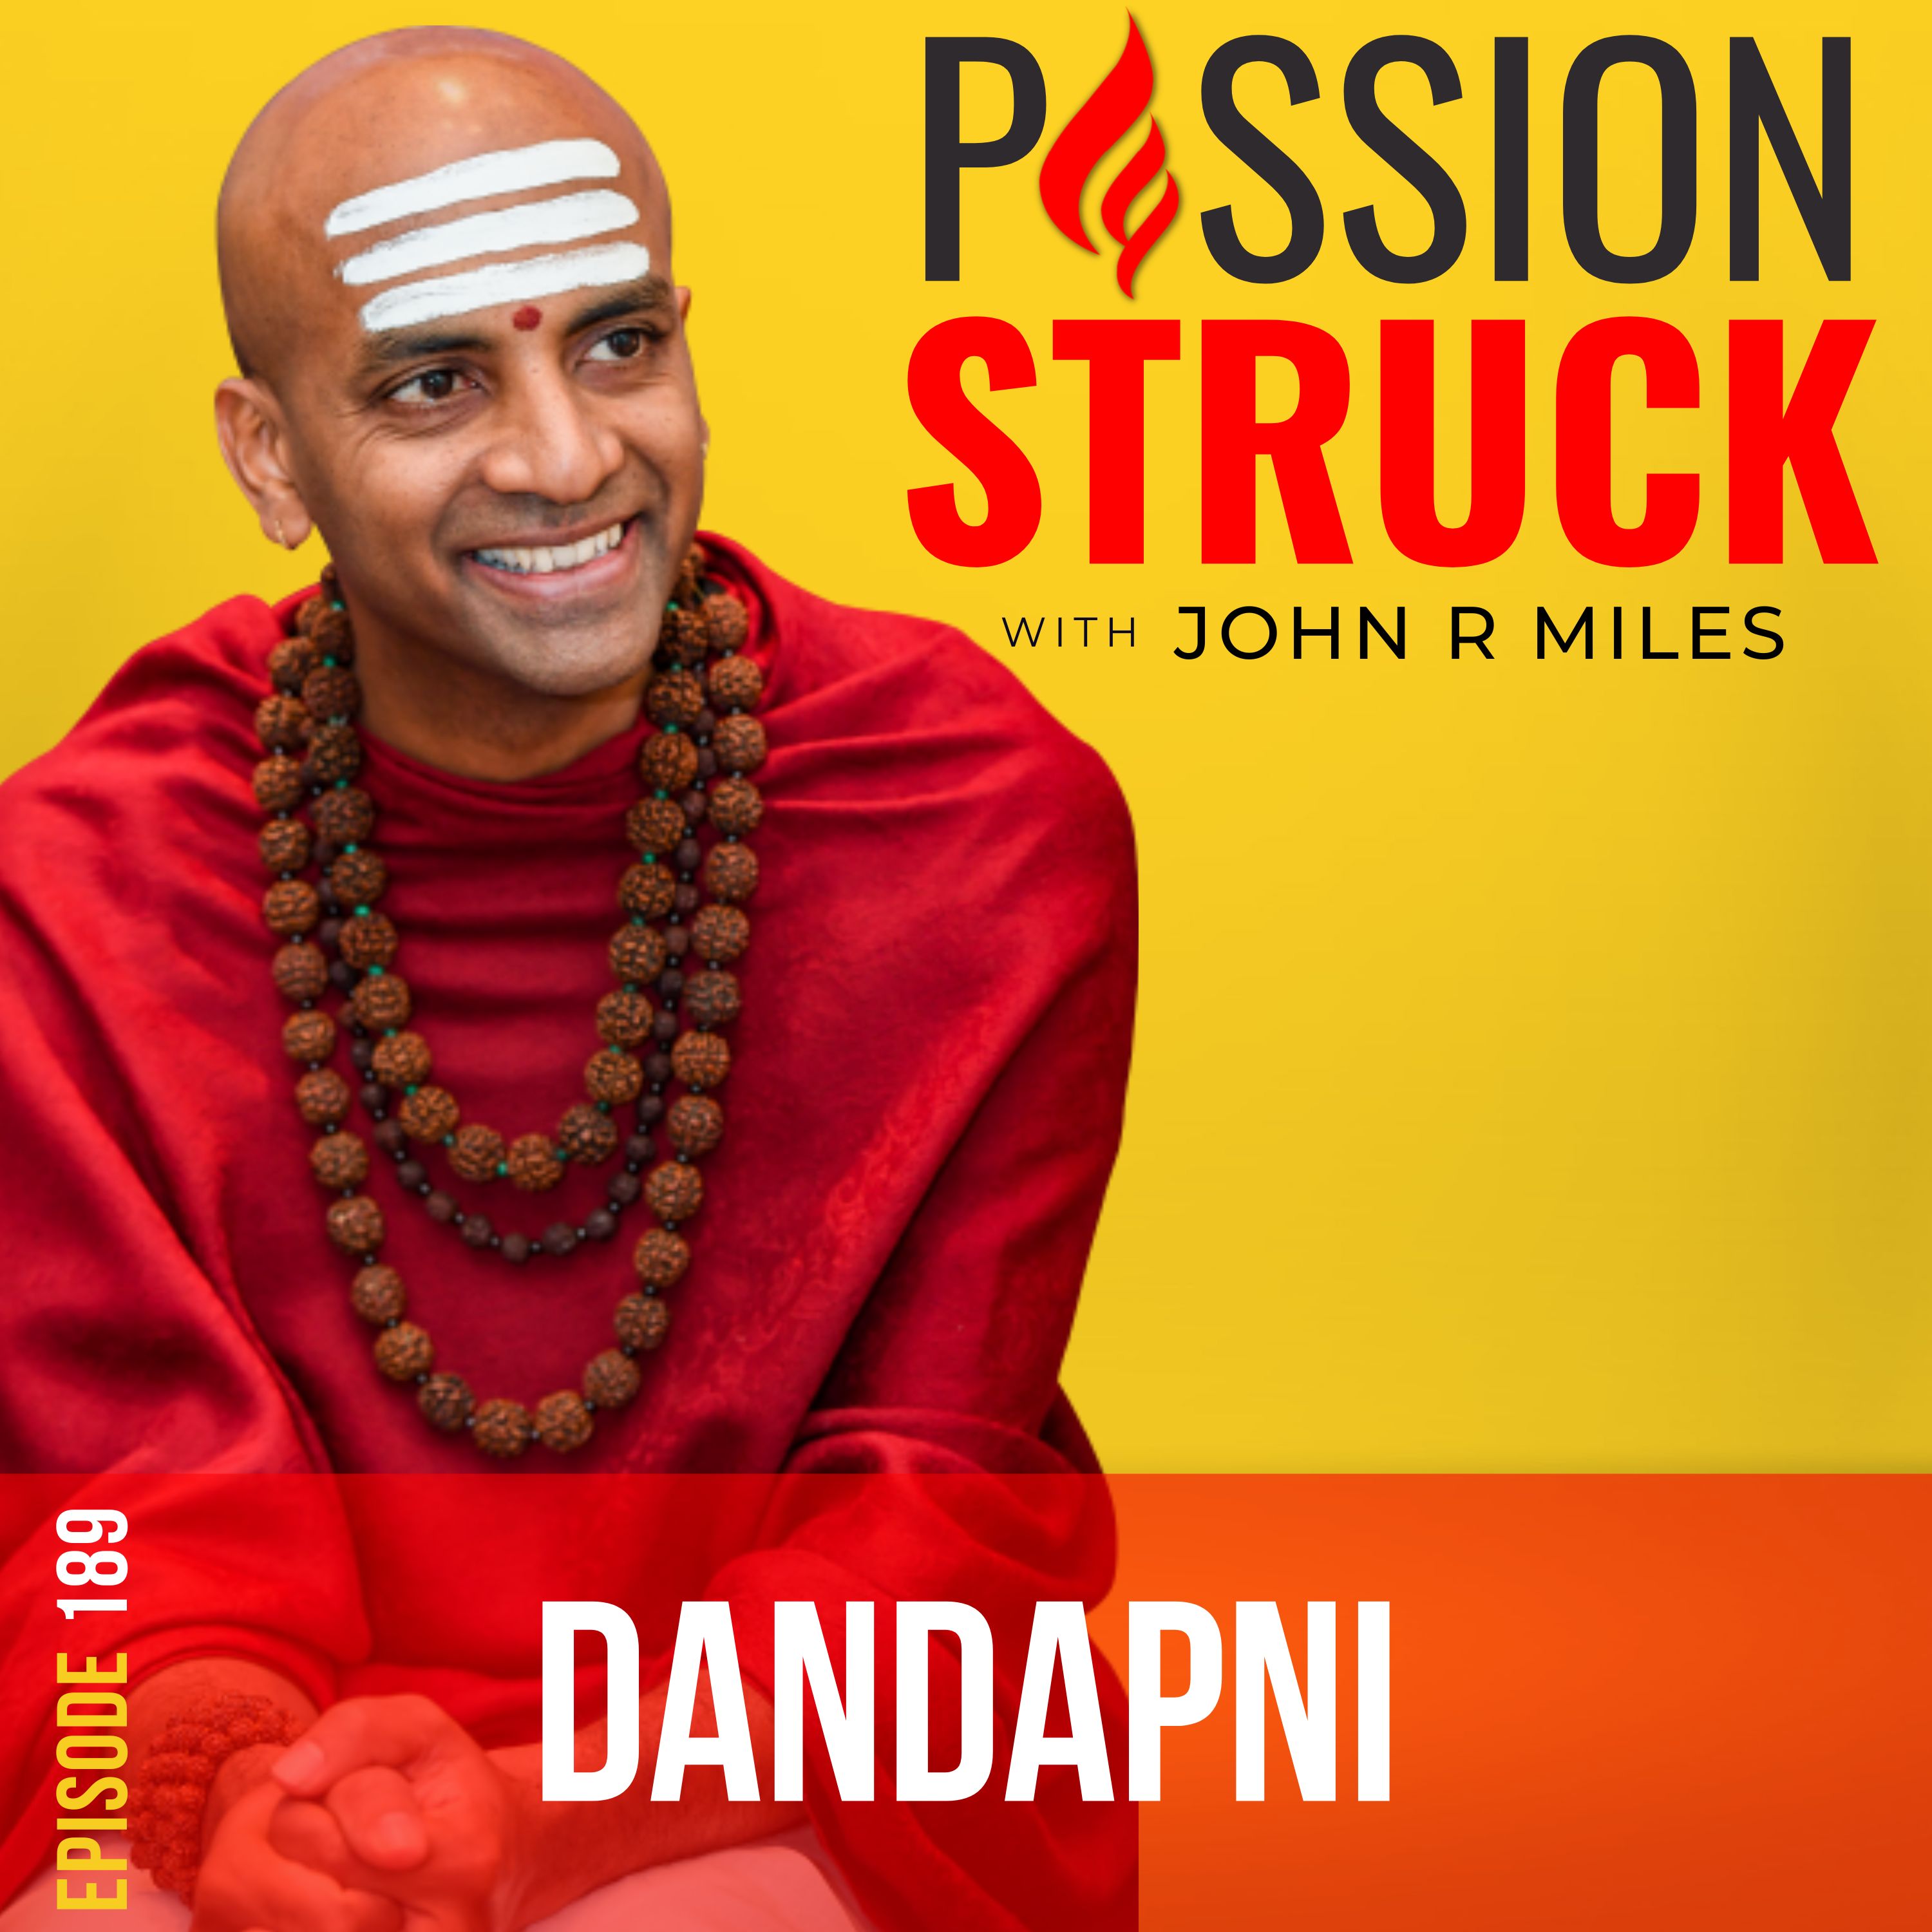 Passion Struck with John R. Miles album cover episode 189 featuring Dandapani